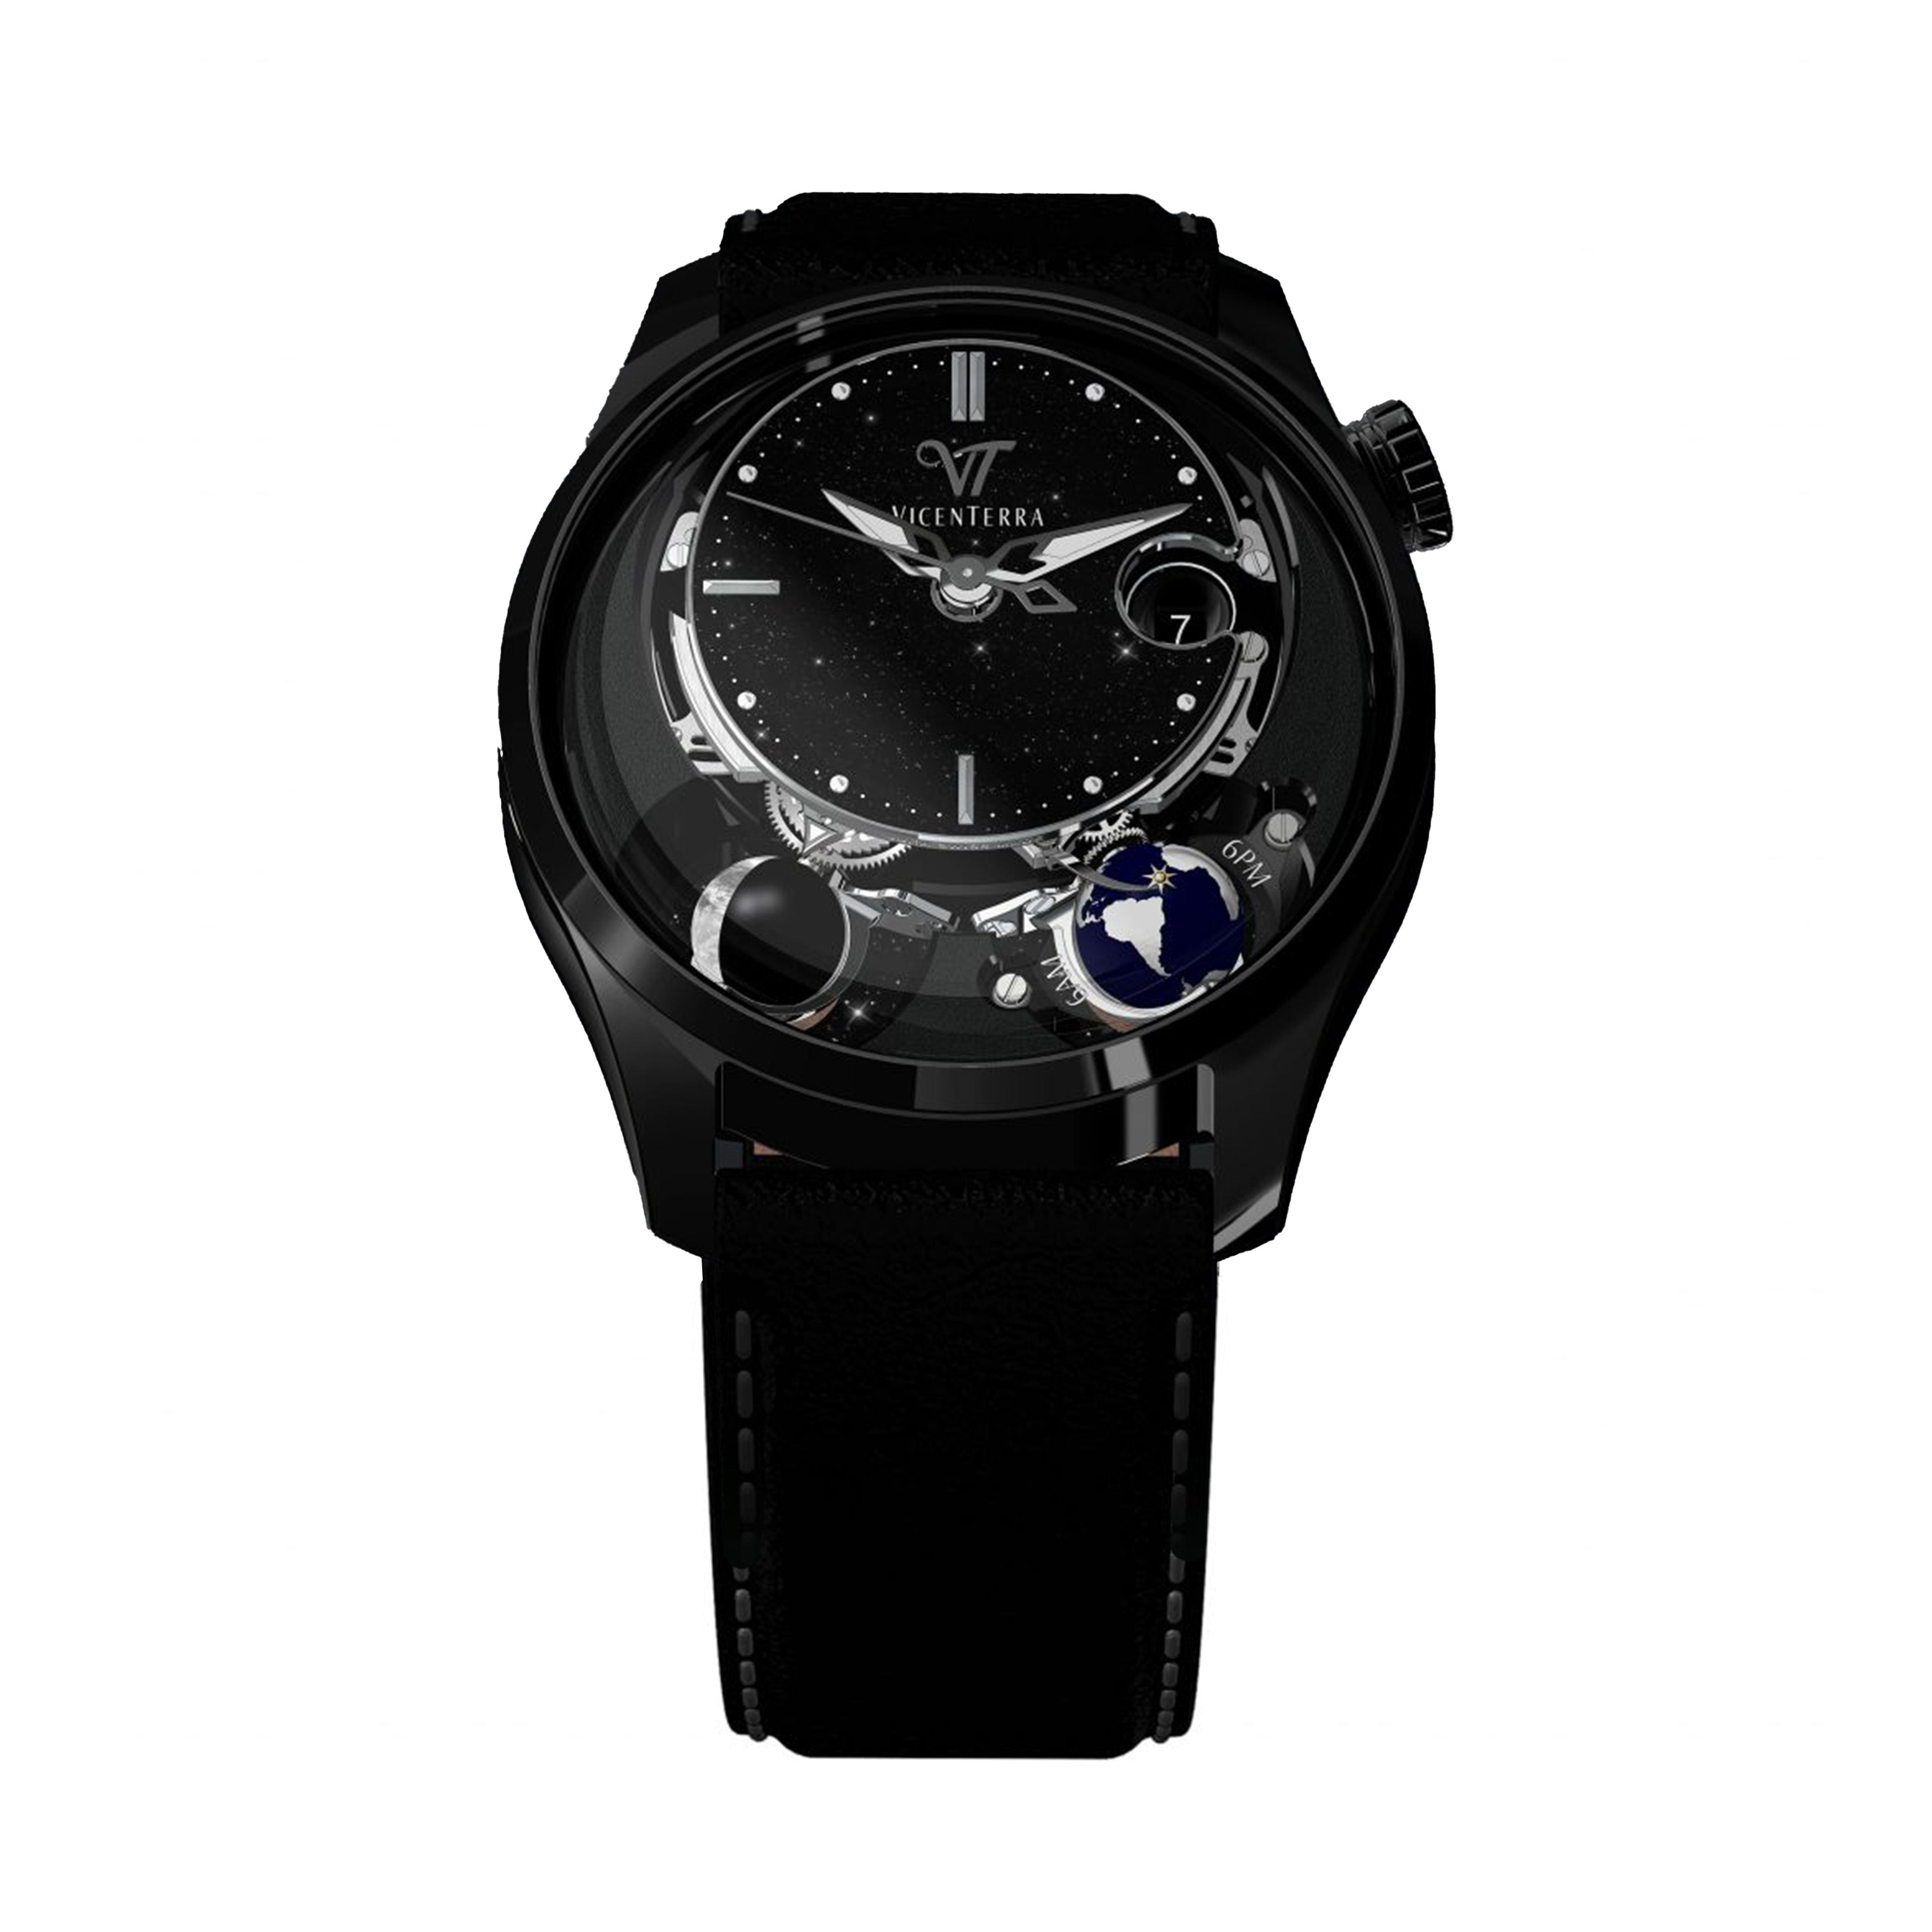 Vicenterra Astroluna Classic T2 Black Aventurine Watch, 41.5mm Black Aventurine Dial, VT.274.01.22